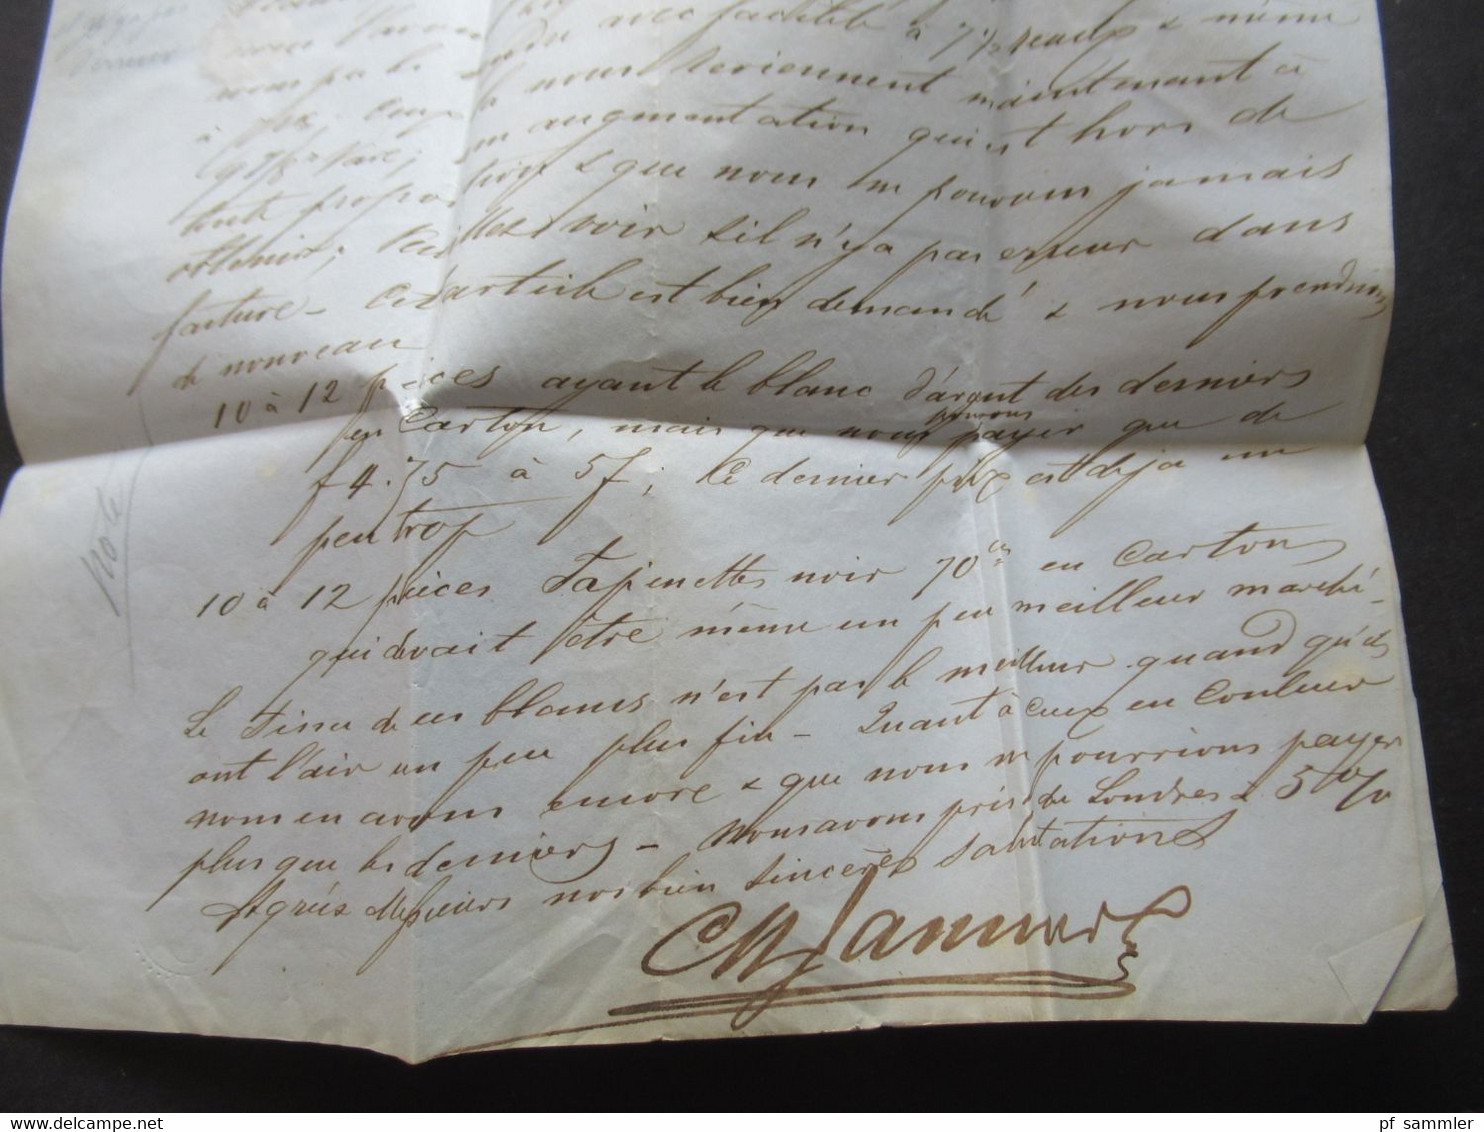 USA / Cuba Havana Forwarded Letter / Shippost 22.2.1851 Schiffspost roter Ra 2 Colonies Faltbrief mit Inhalt nach Paris